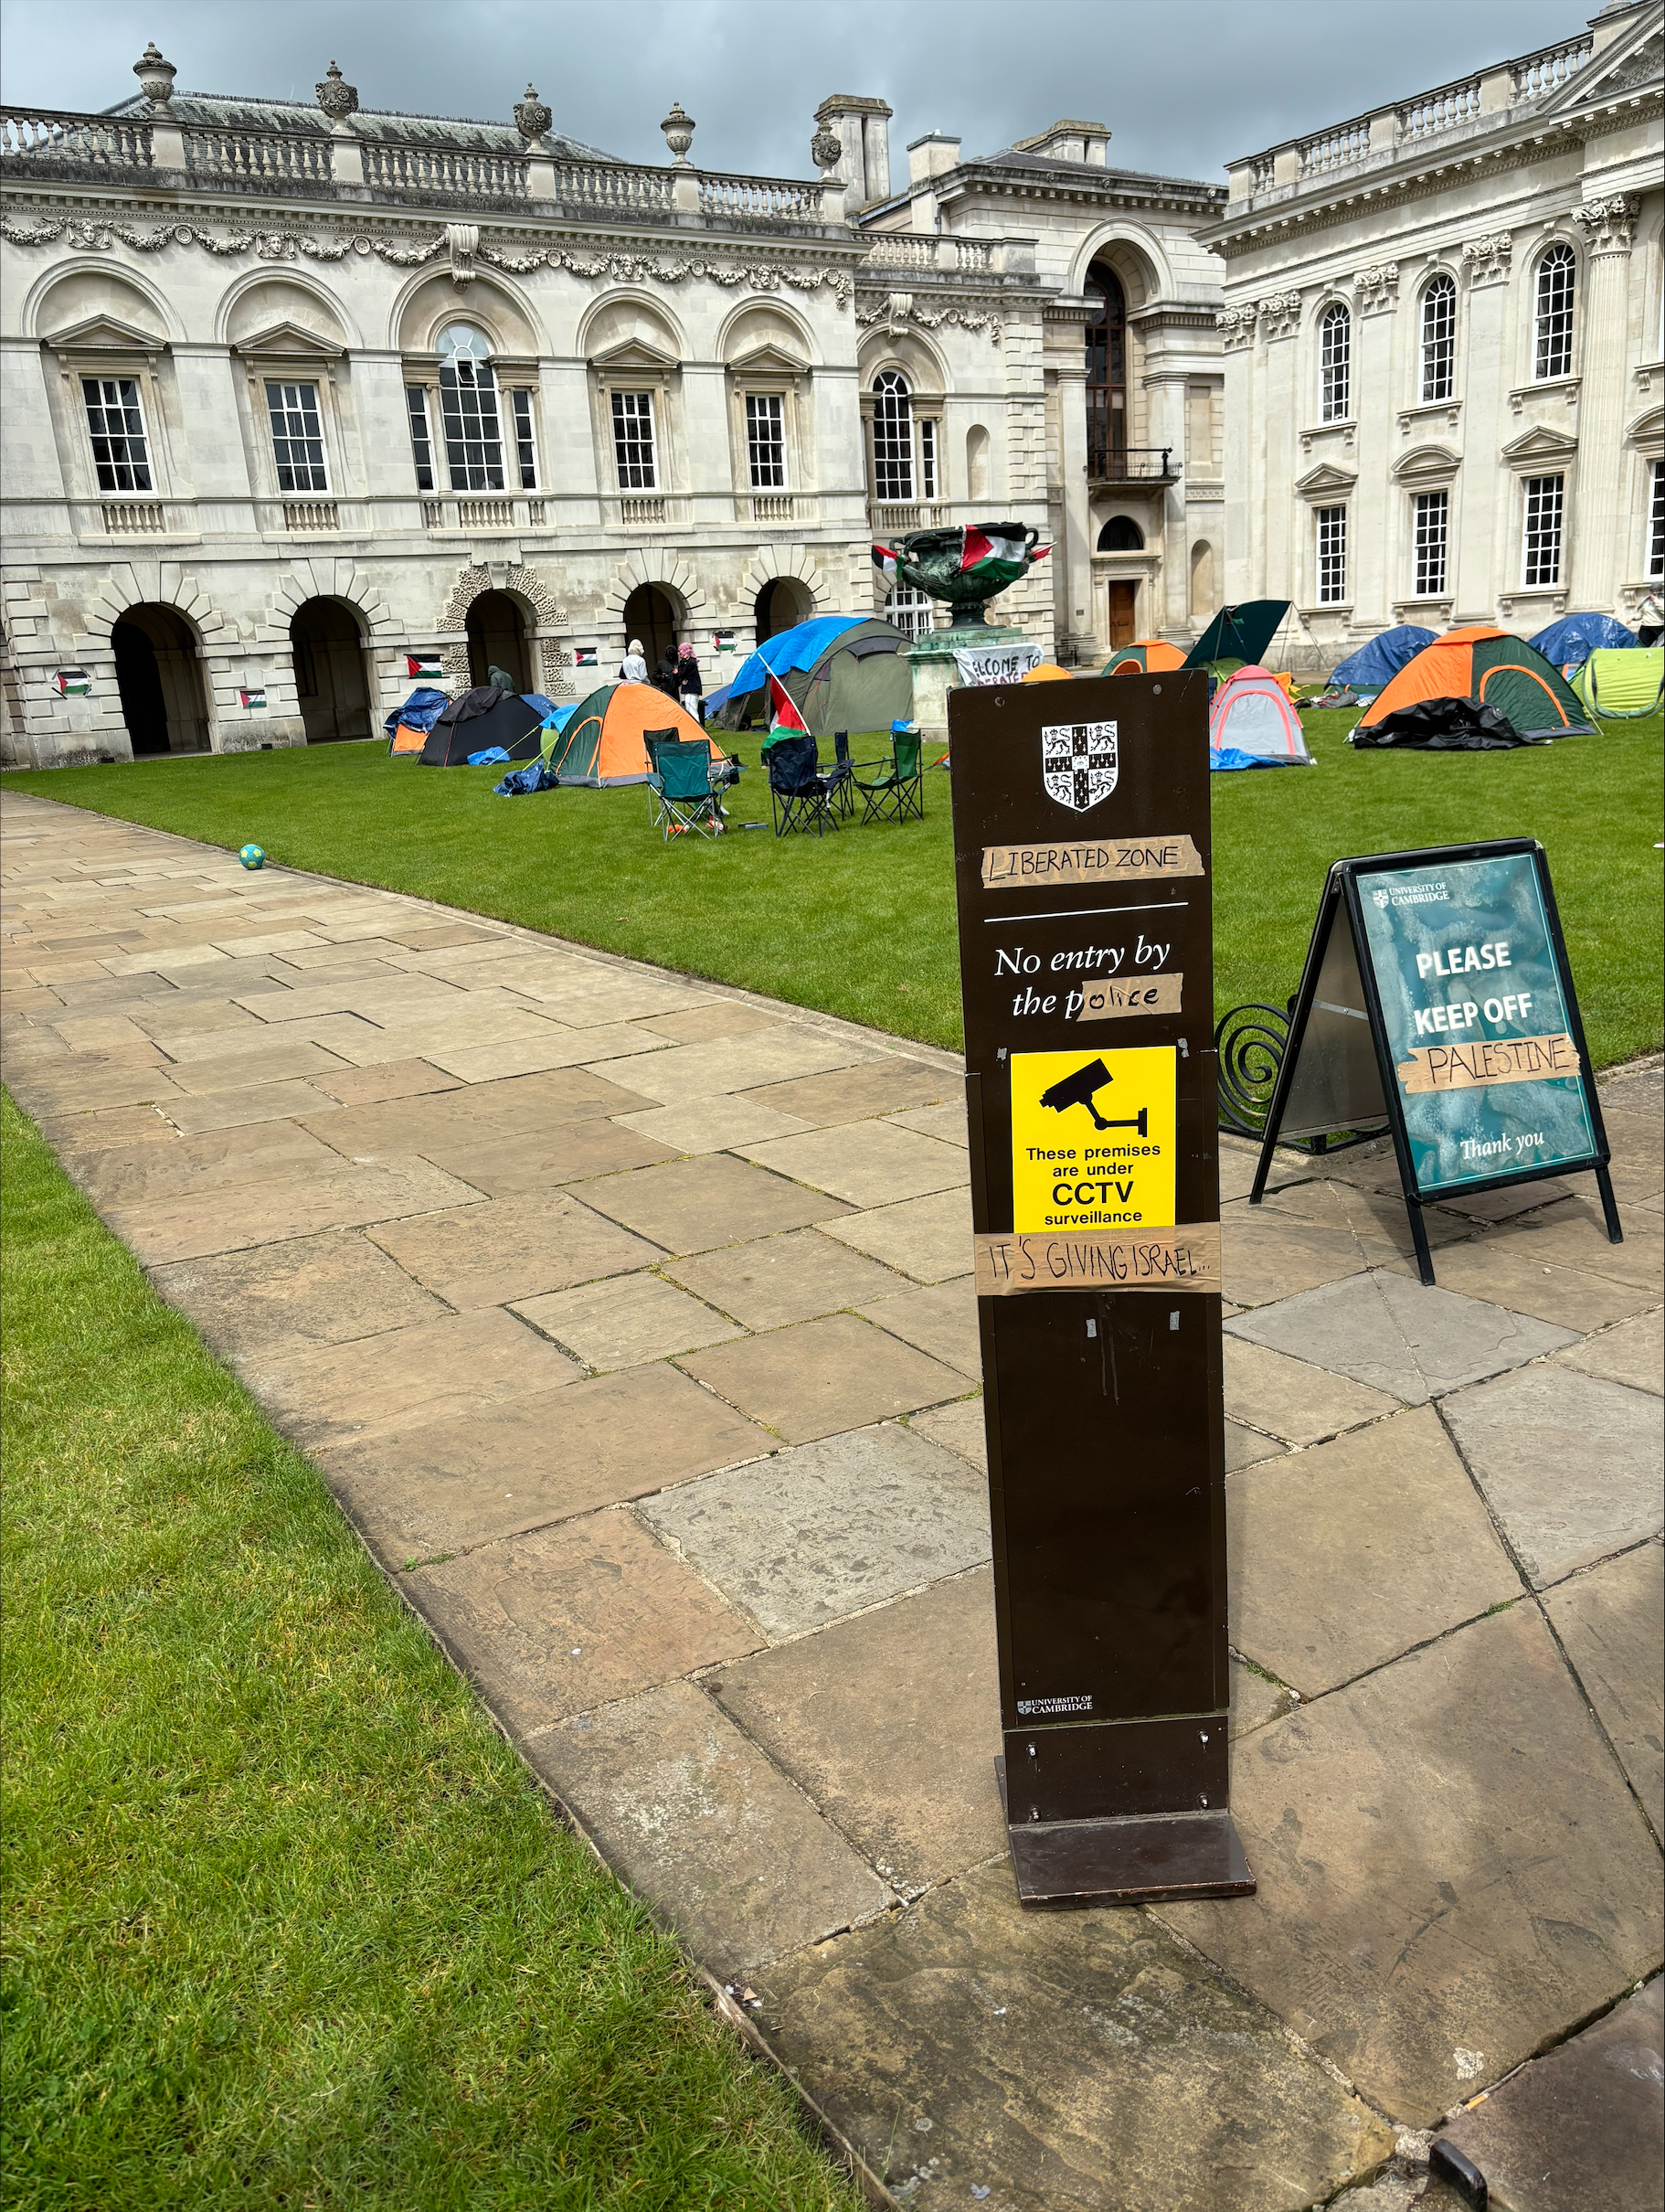 A protest encampment was set up outside Senate House at Cambridge University. (Sam Russell/ PA)